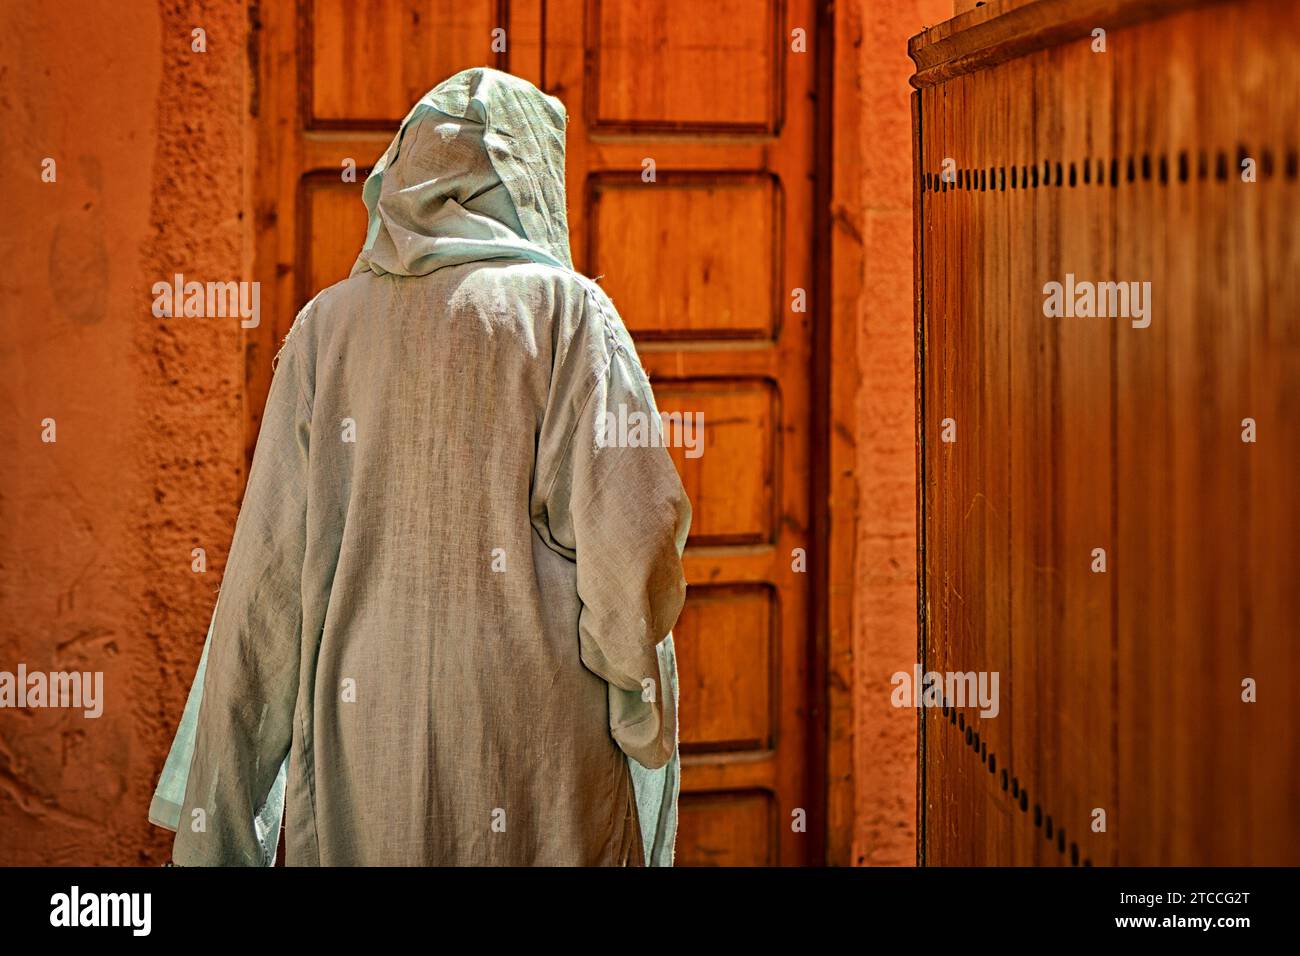 Moroccan woman wearing niqab is walking inside a Marrakech or Marrakesh Medina alley. Traditional Islamic female dress. Stock Photo